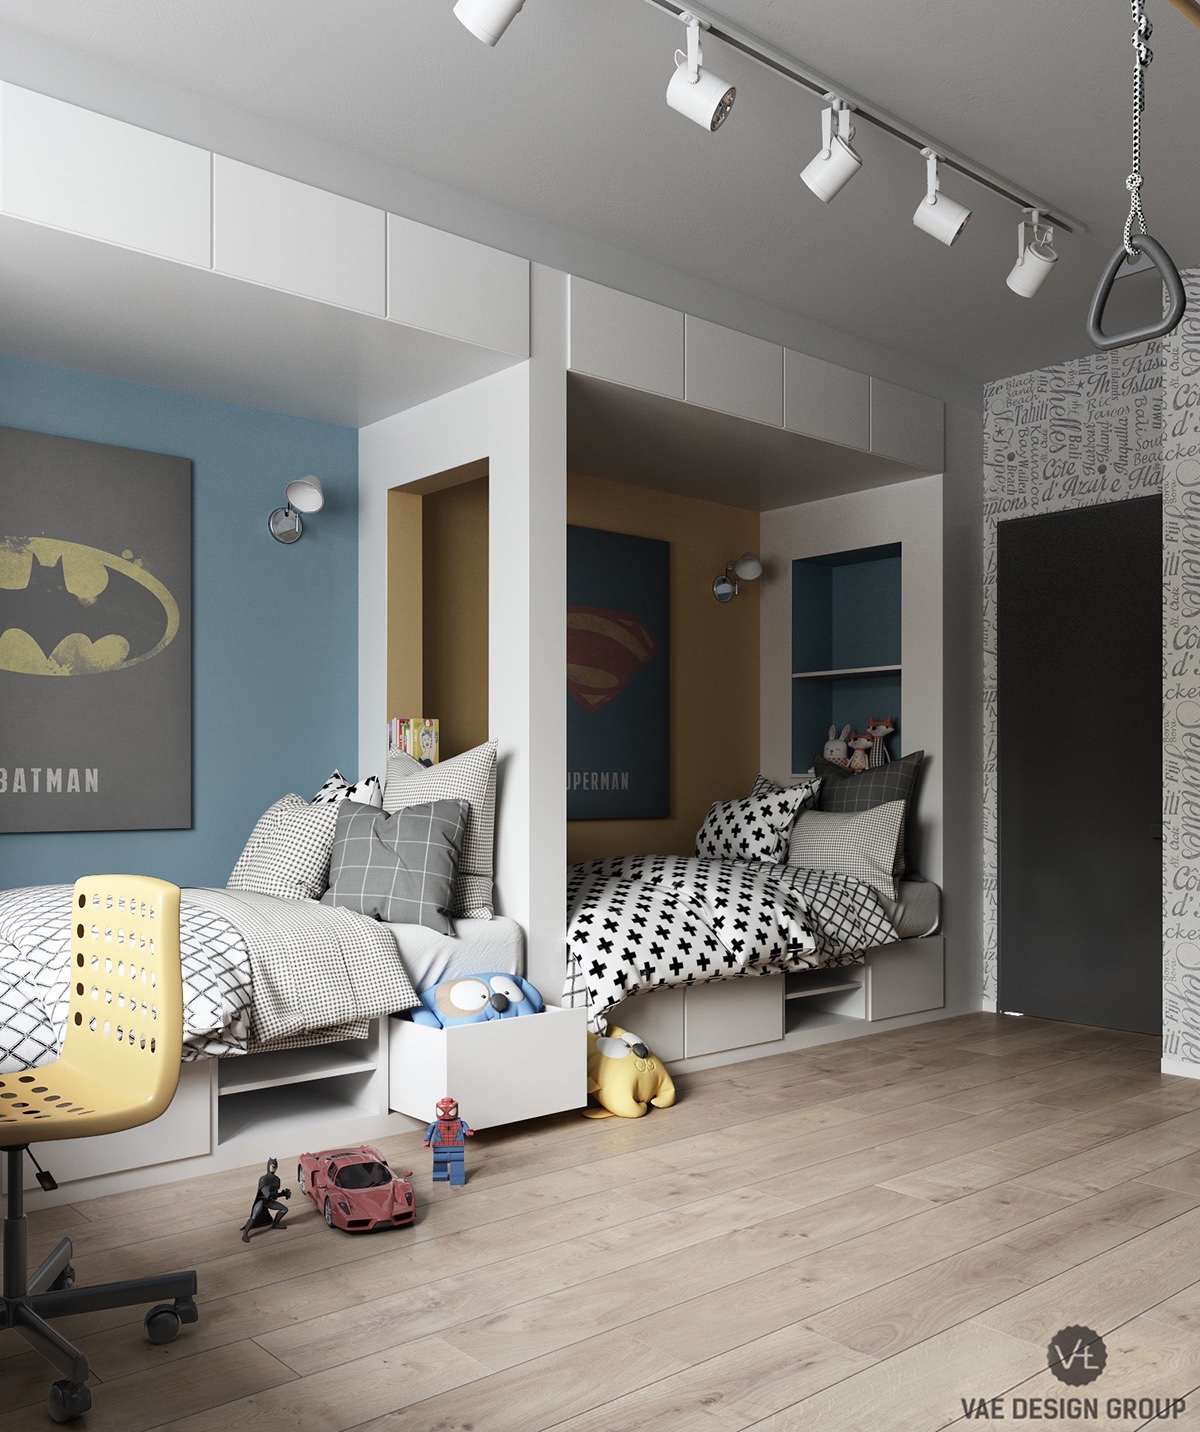 comic book decor for kids bedroom | Interior Design Ideas